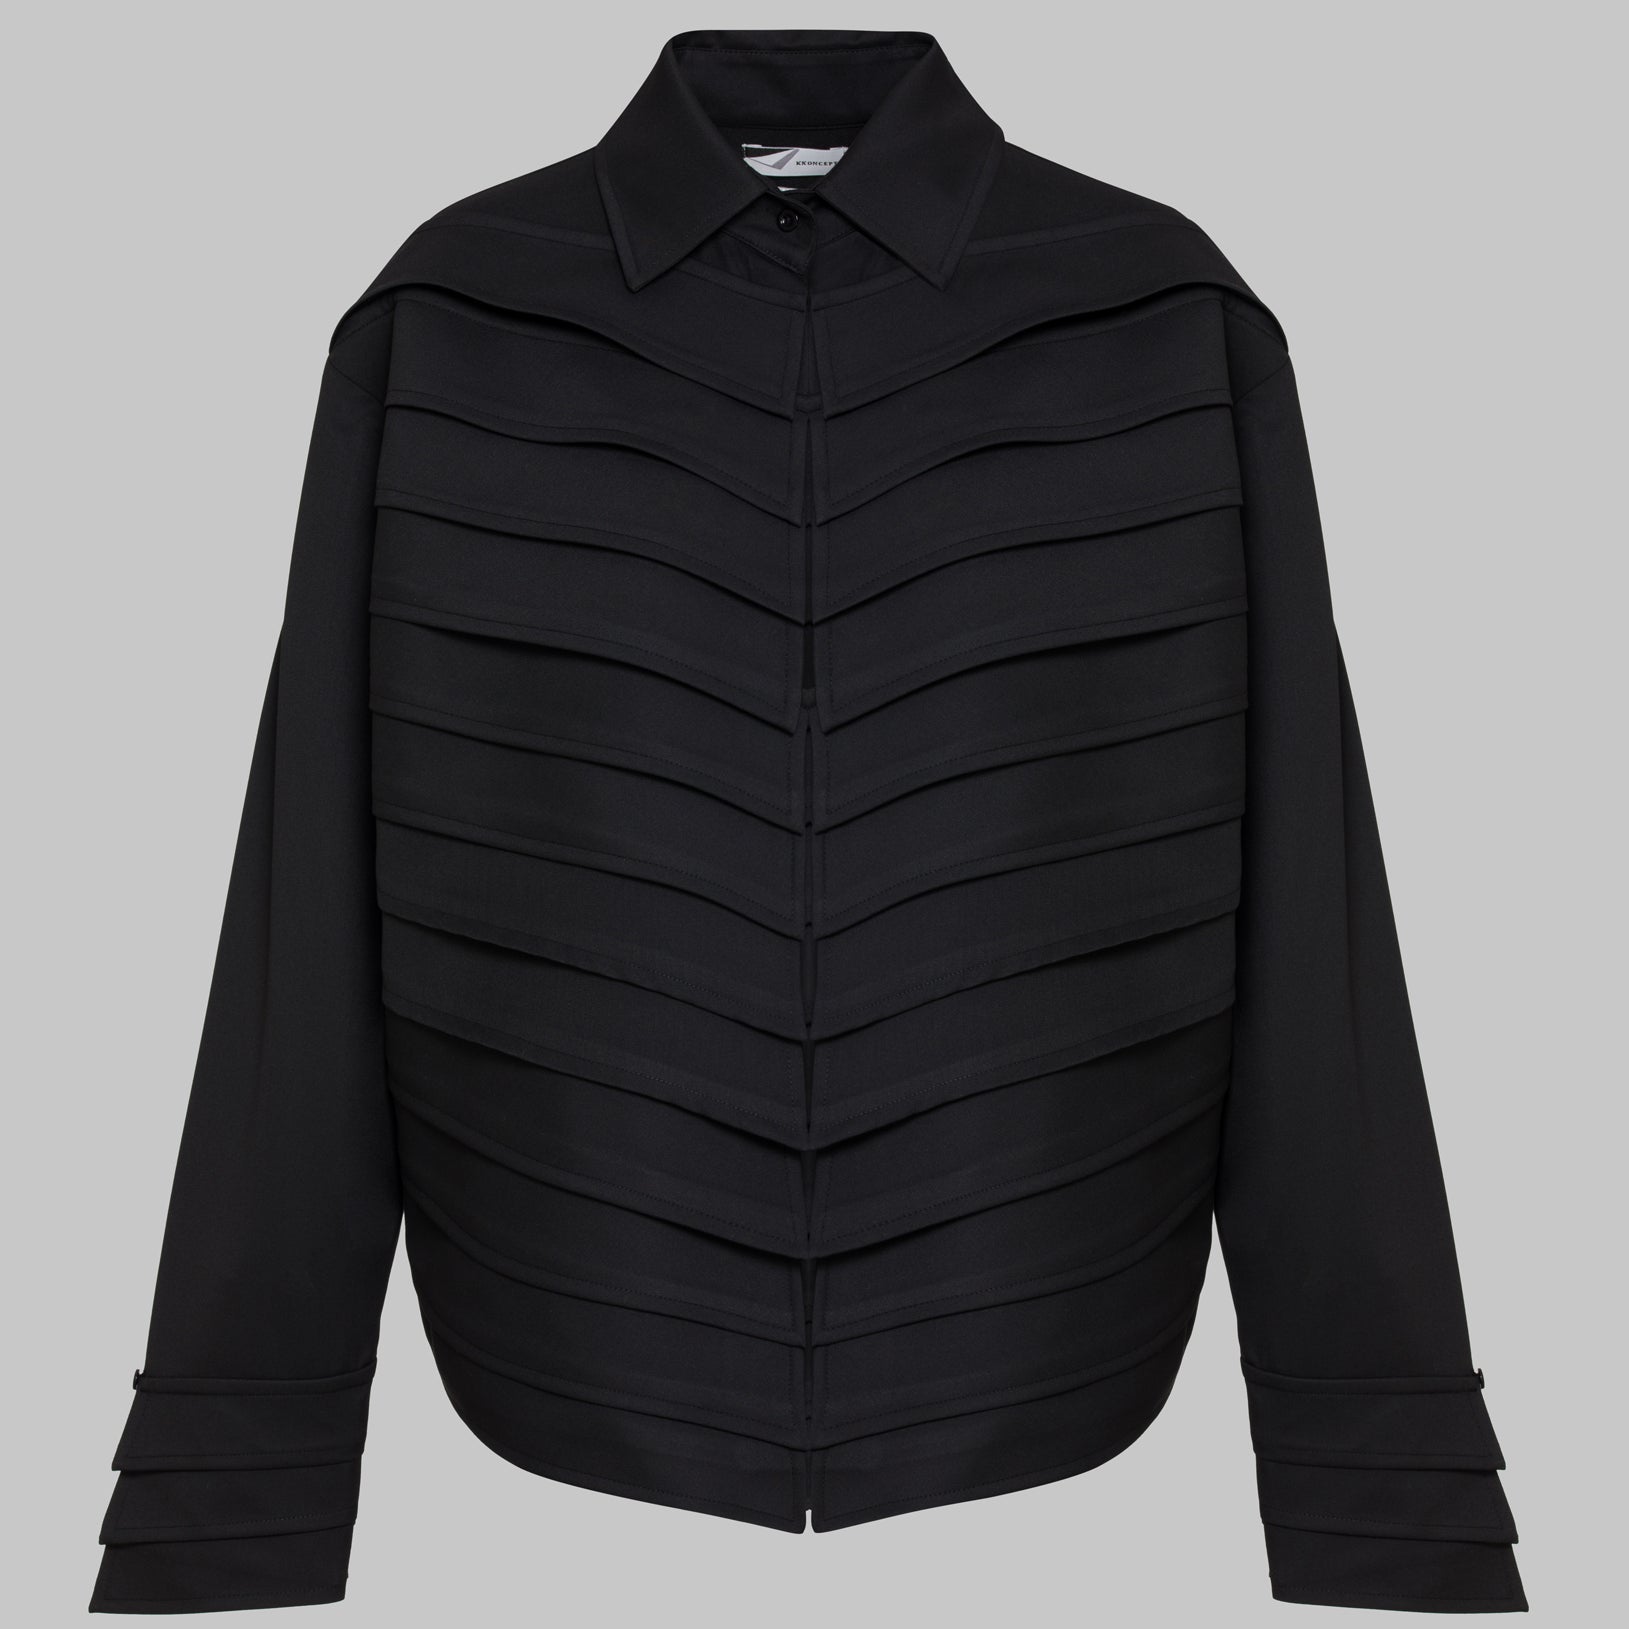 Black Collar Jacket
